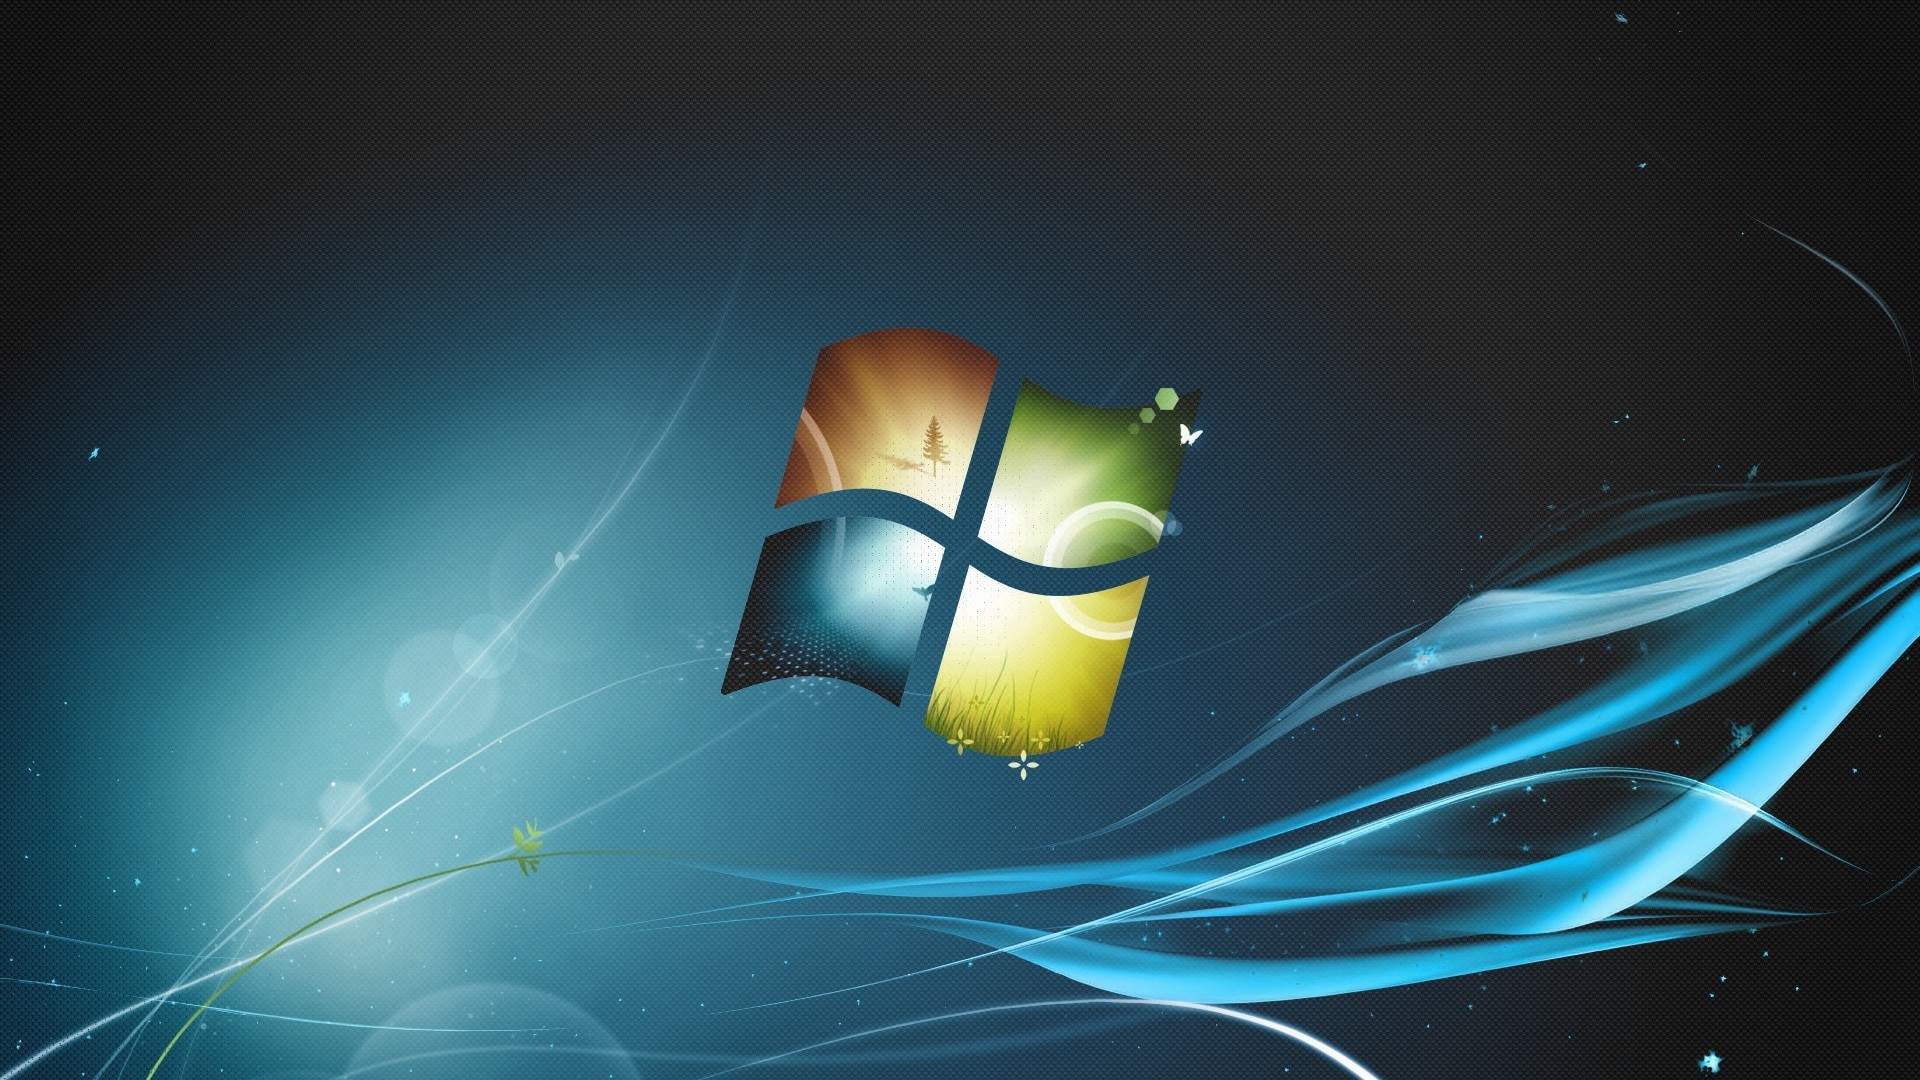 Microsoft Windows, Windows 7, Logo Wallpapers HD / Desktop and Mobile ... Full Hd Wallpapers For Windows 8 1920x1080